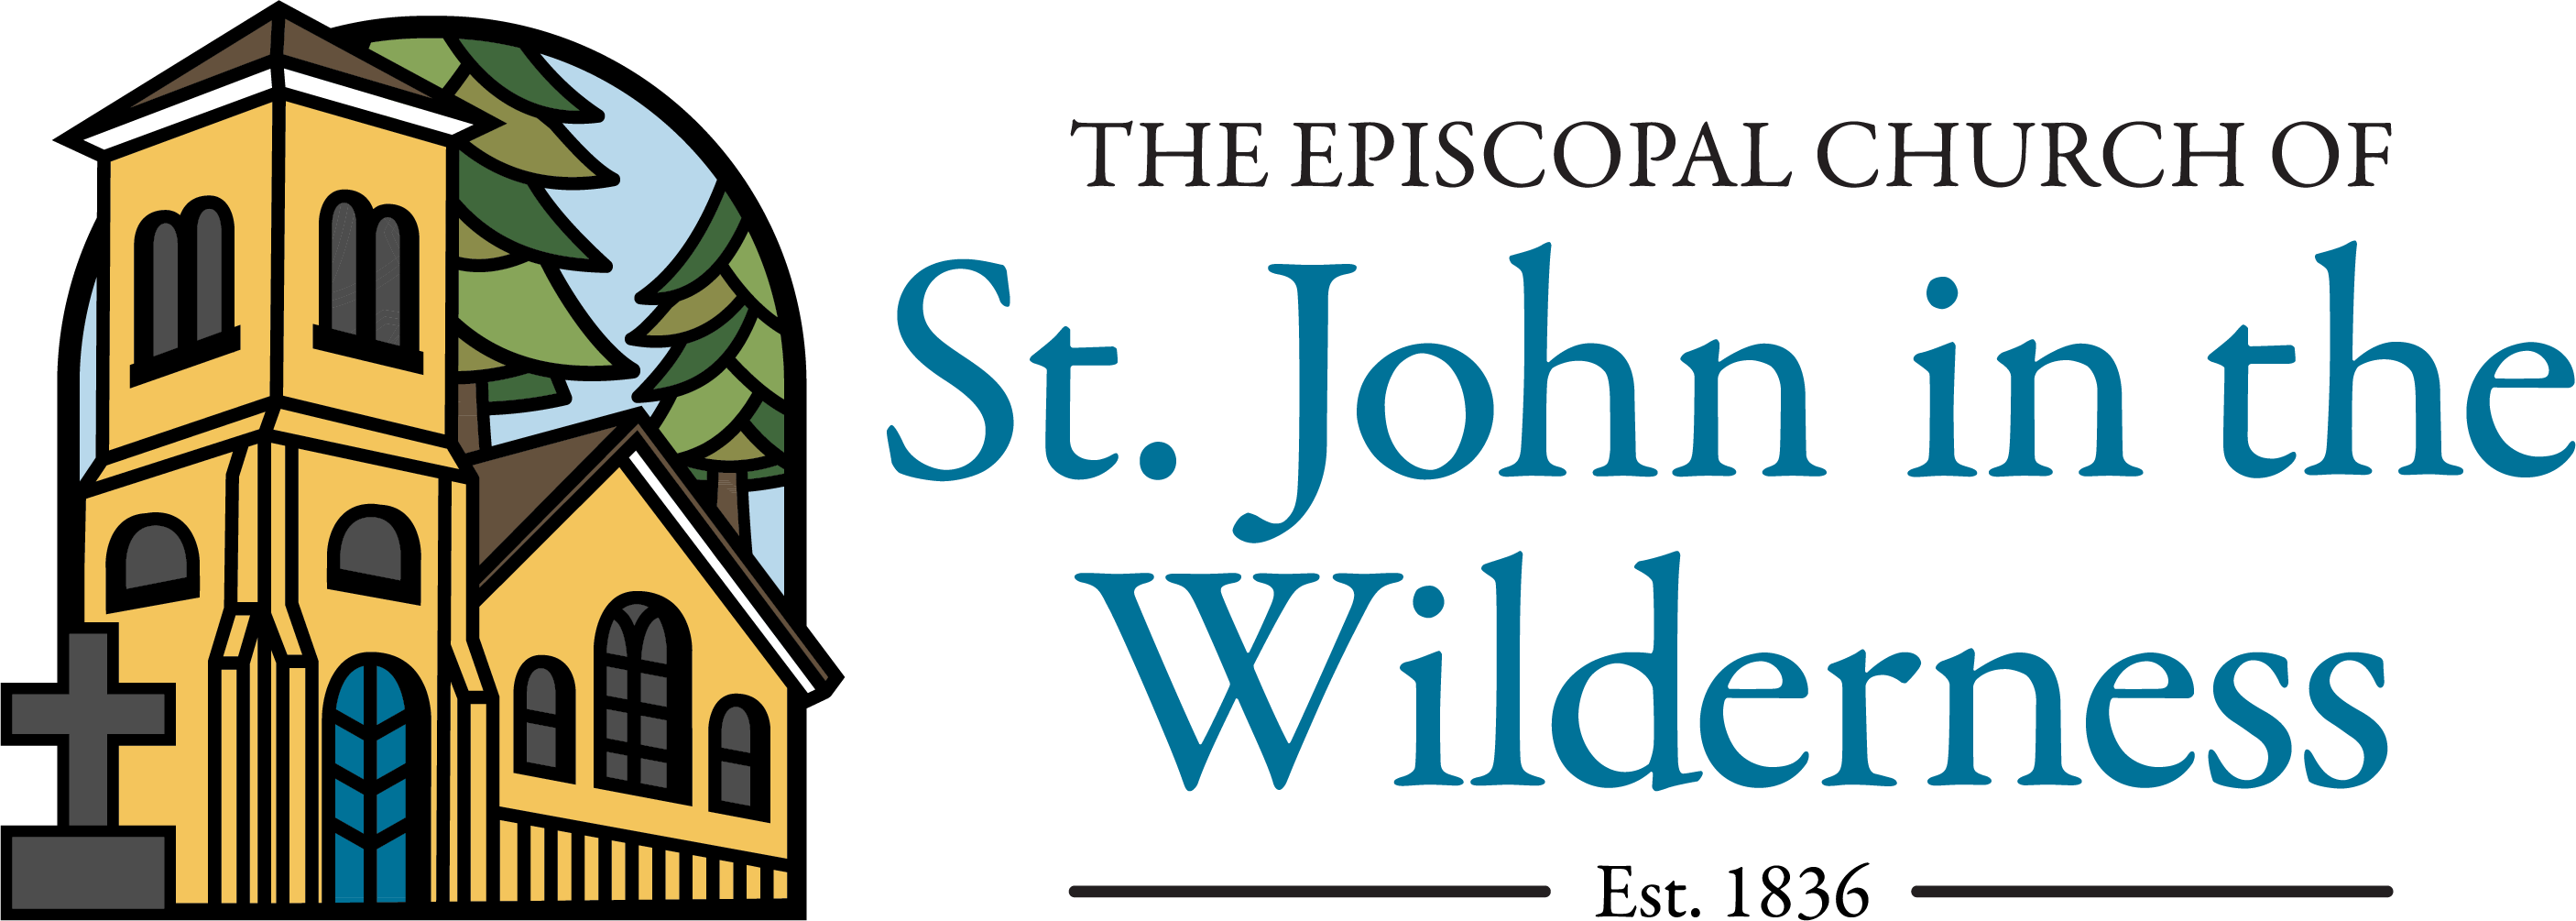 St. John in the Wilderness- Spare Sponsor $1,000